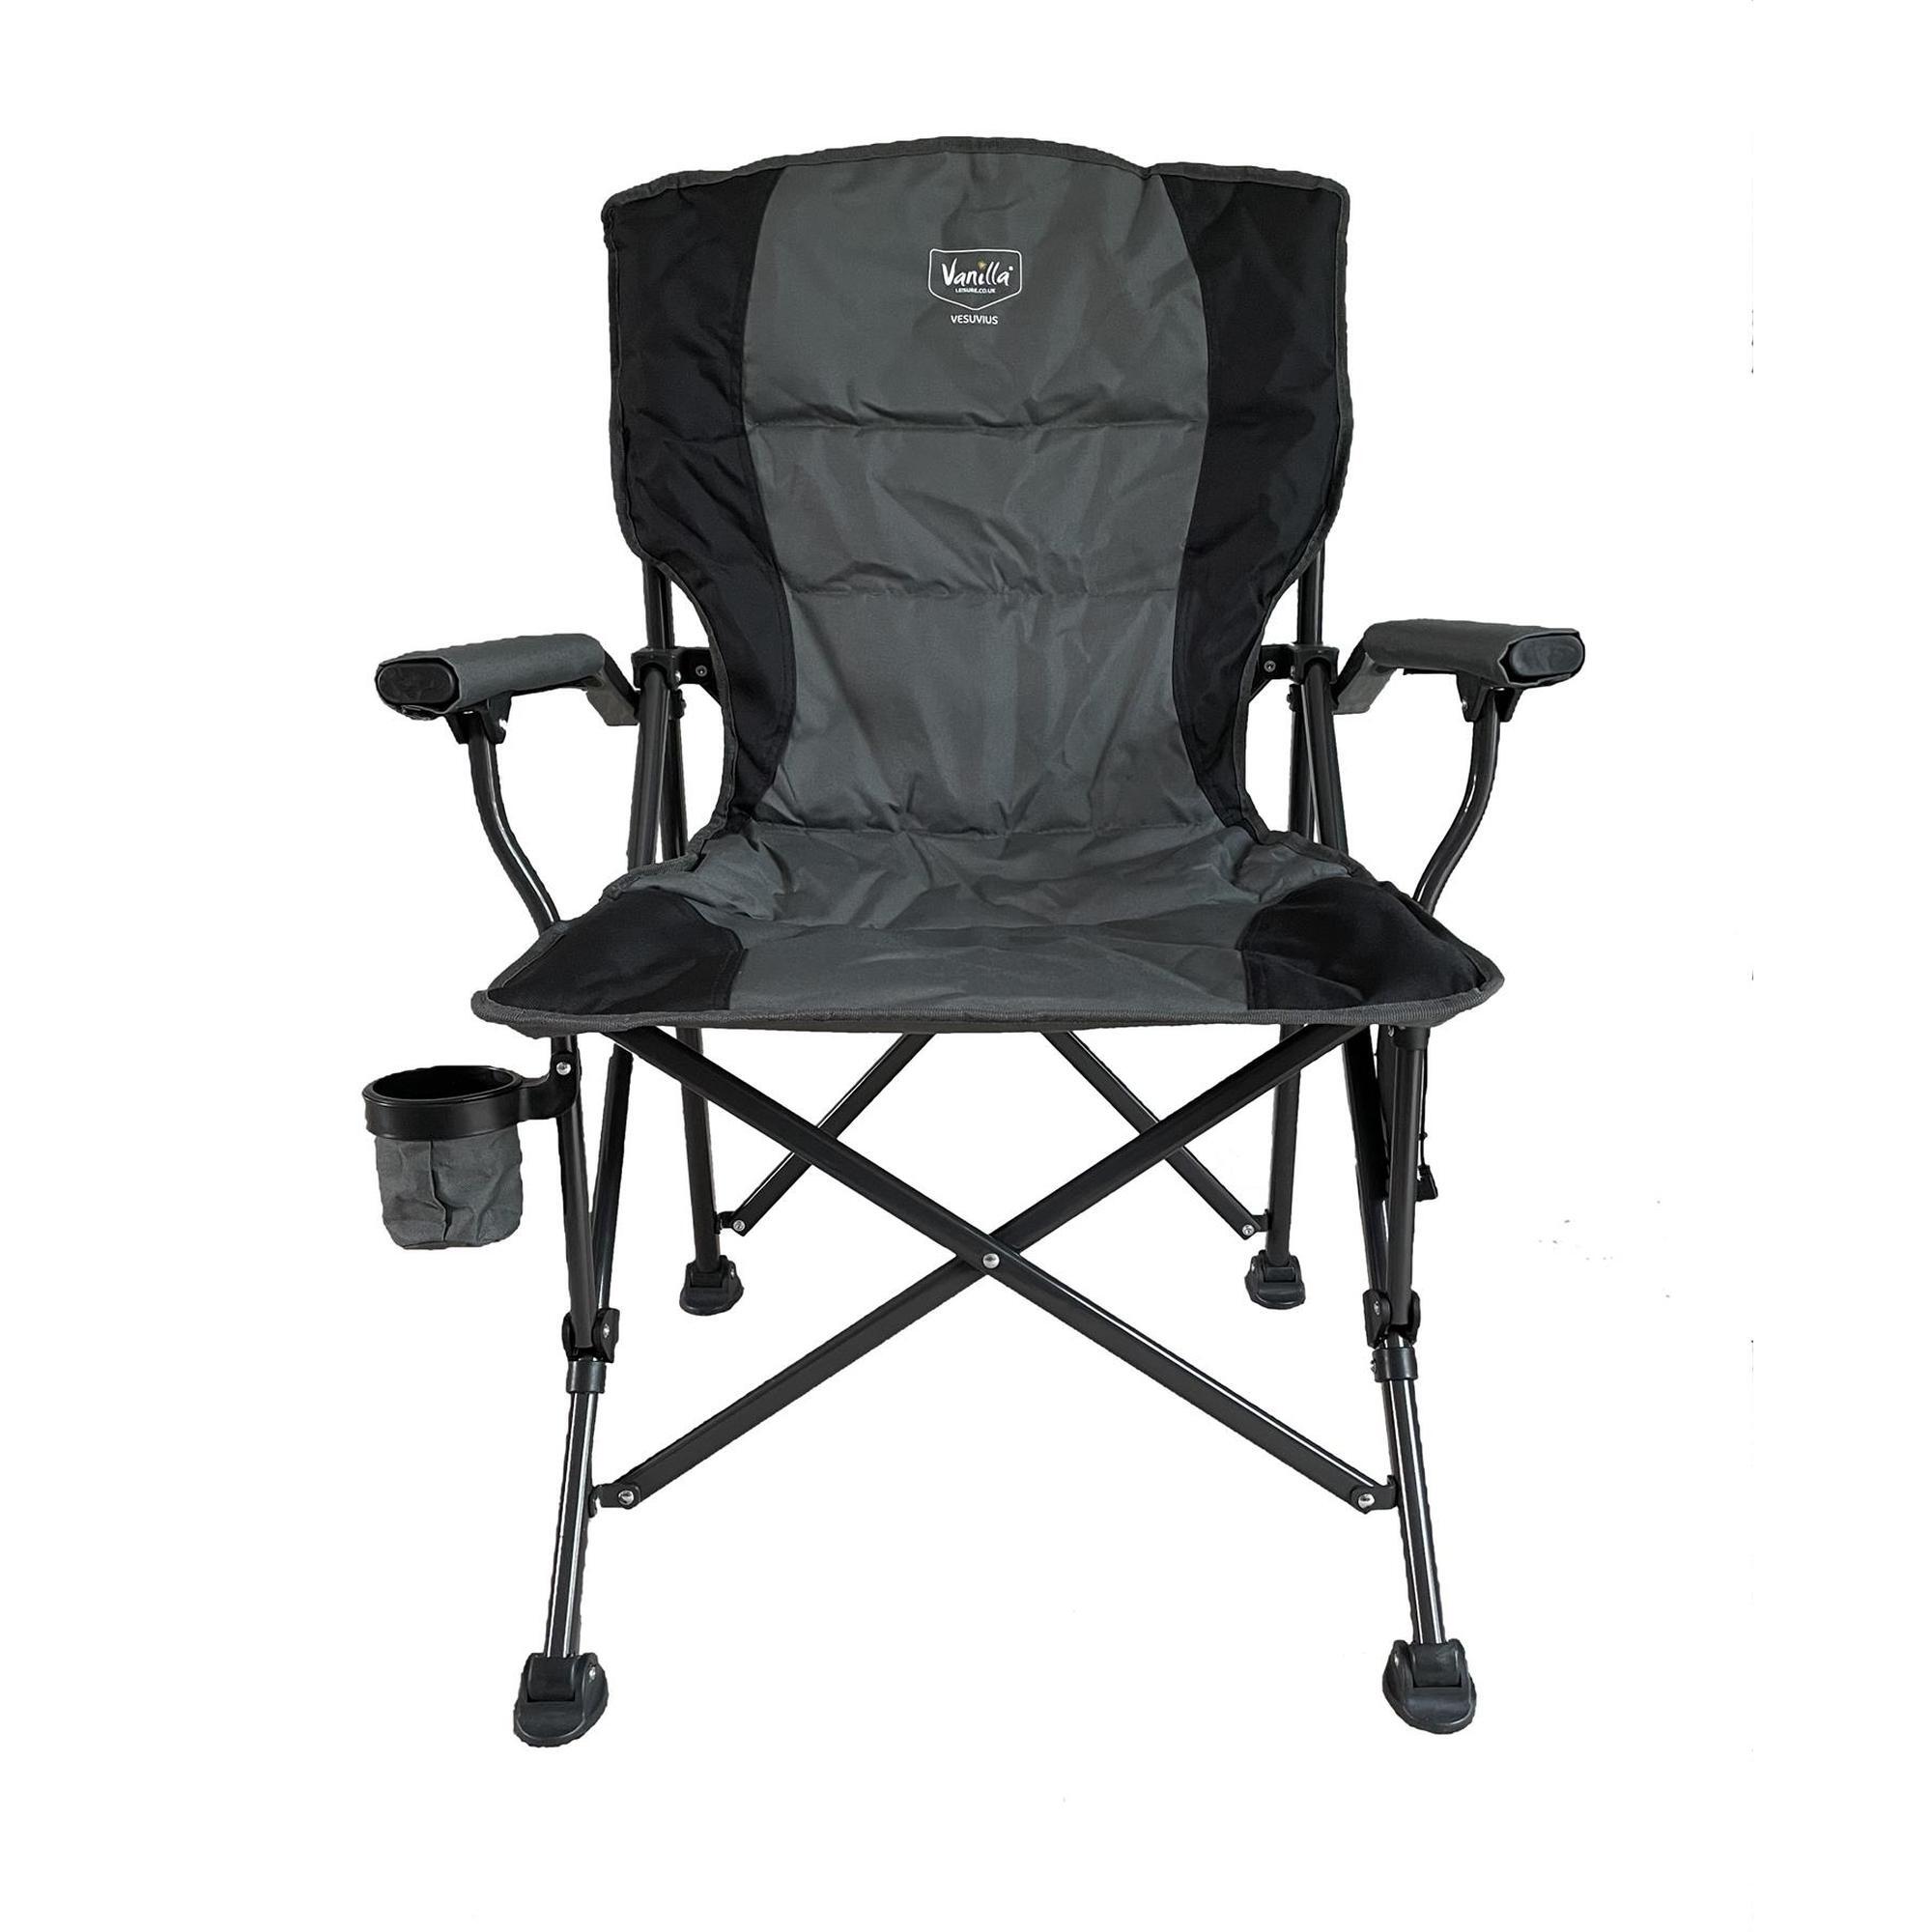 Vanilla Leisure Vesuvius Folding Heated Camping Chair + FREE Power Bank 1/4